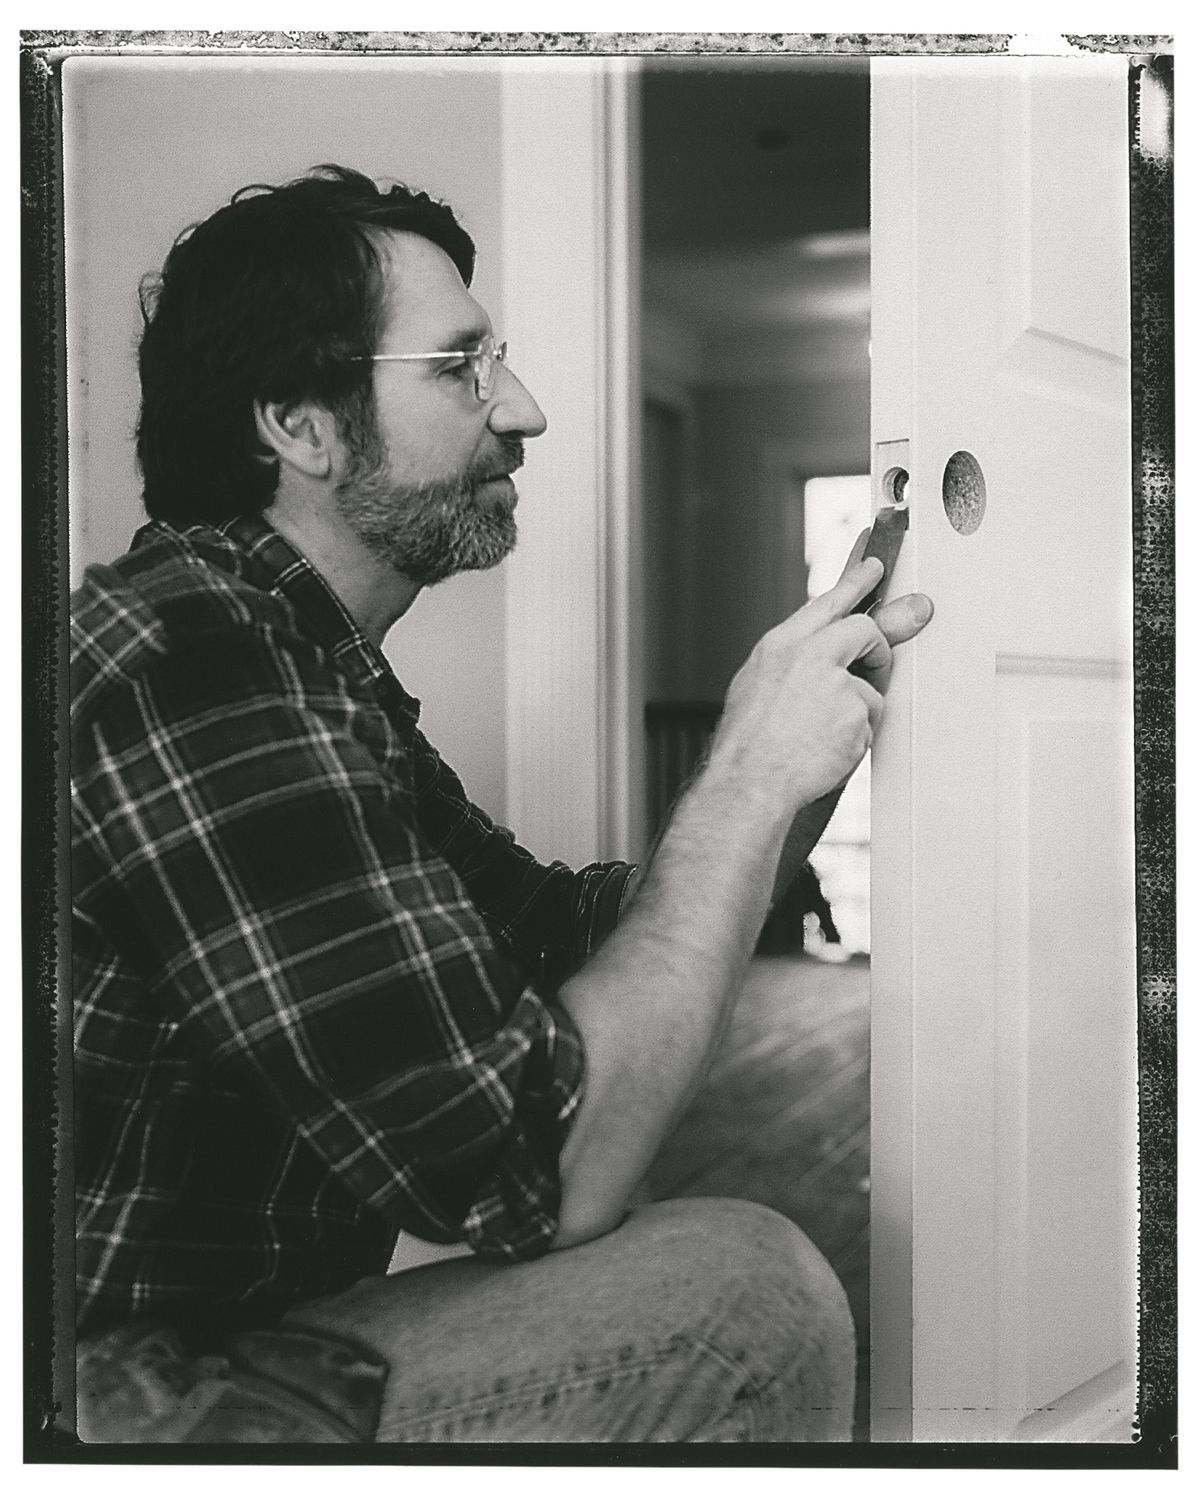 Norm Abram chiseling a door